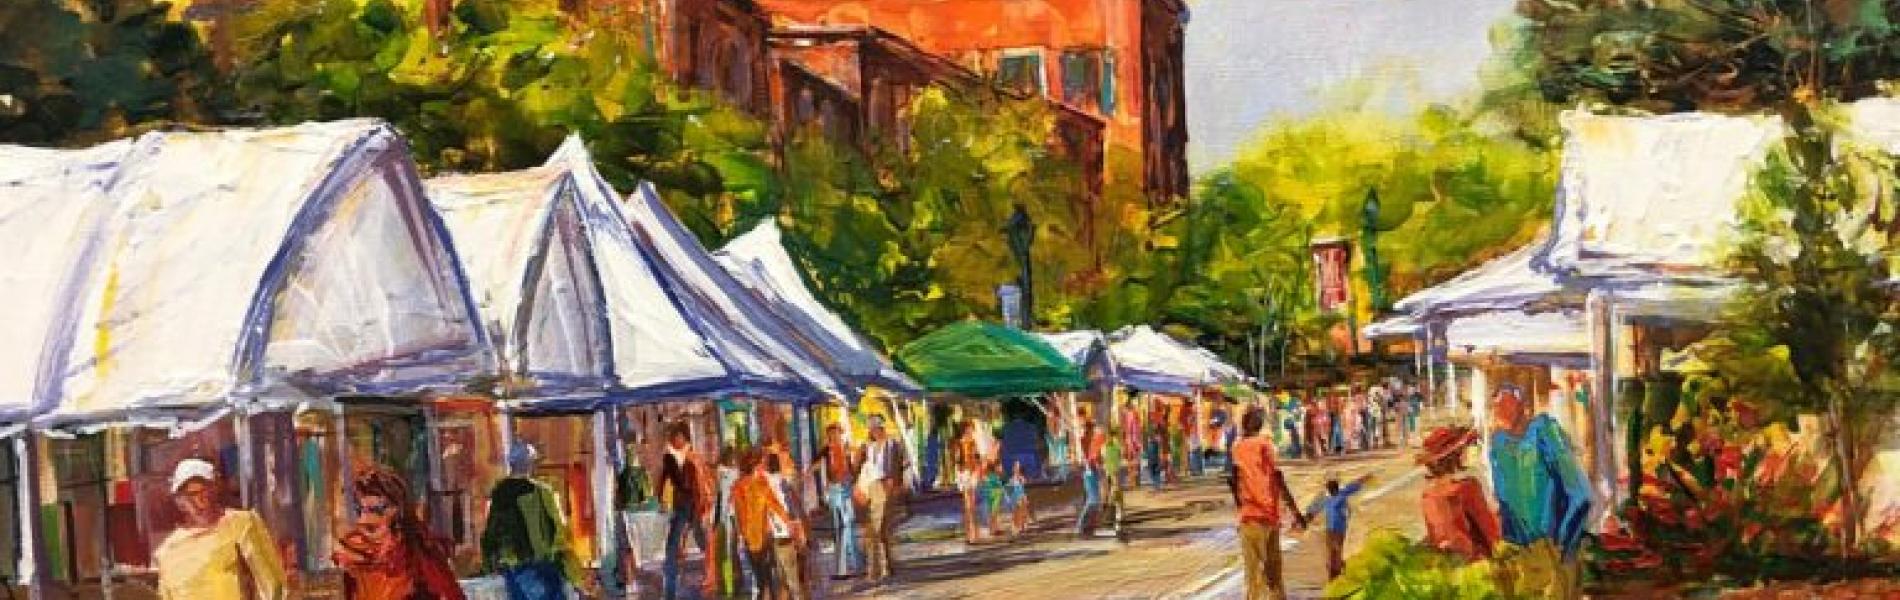 painting rendering of vendors on main street